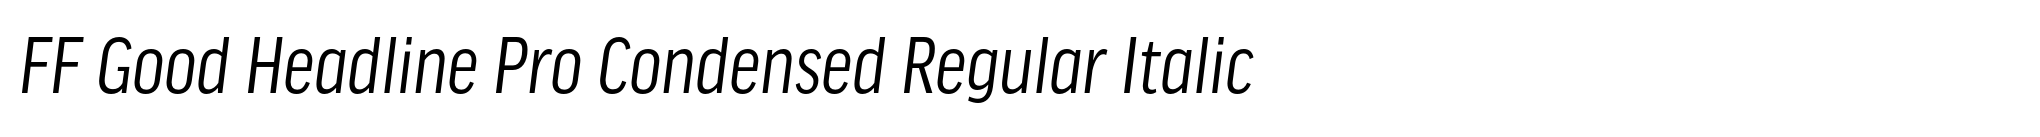 FF Good Headline Pro Condensed Regular Italic image